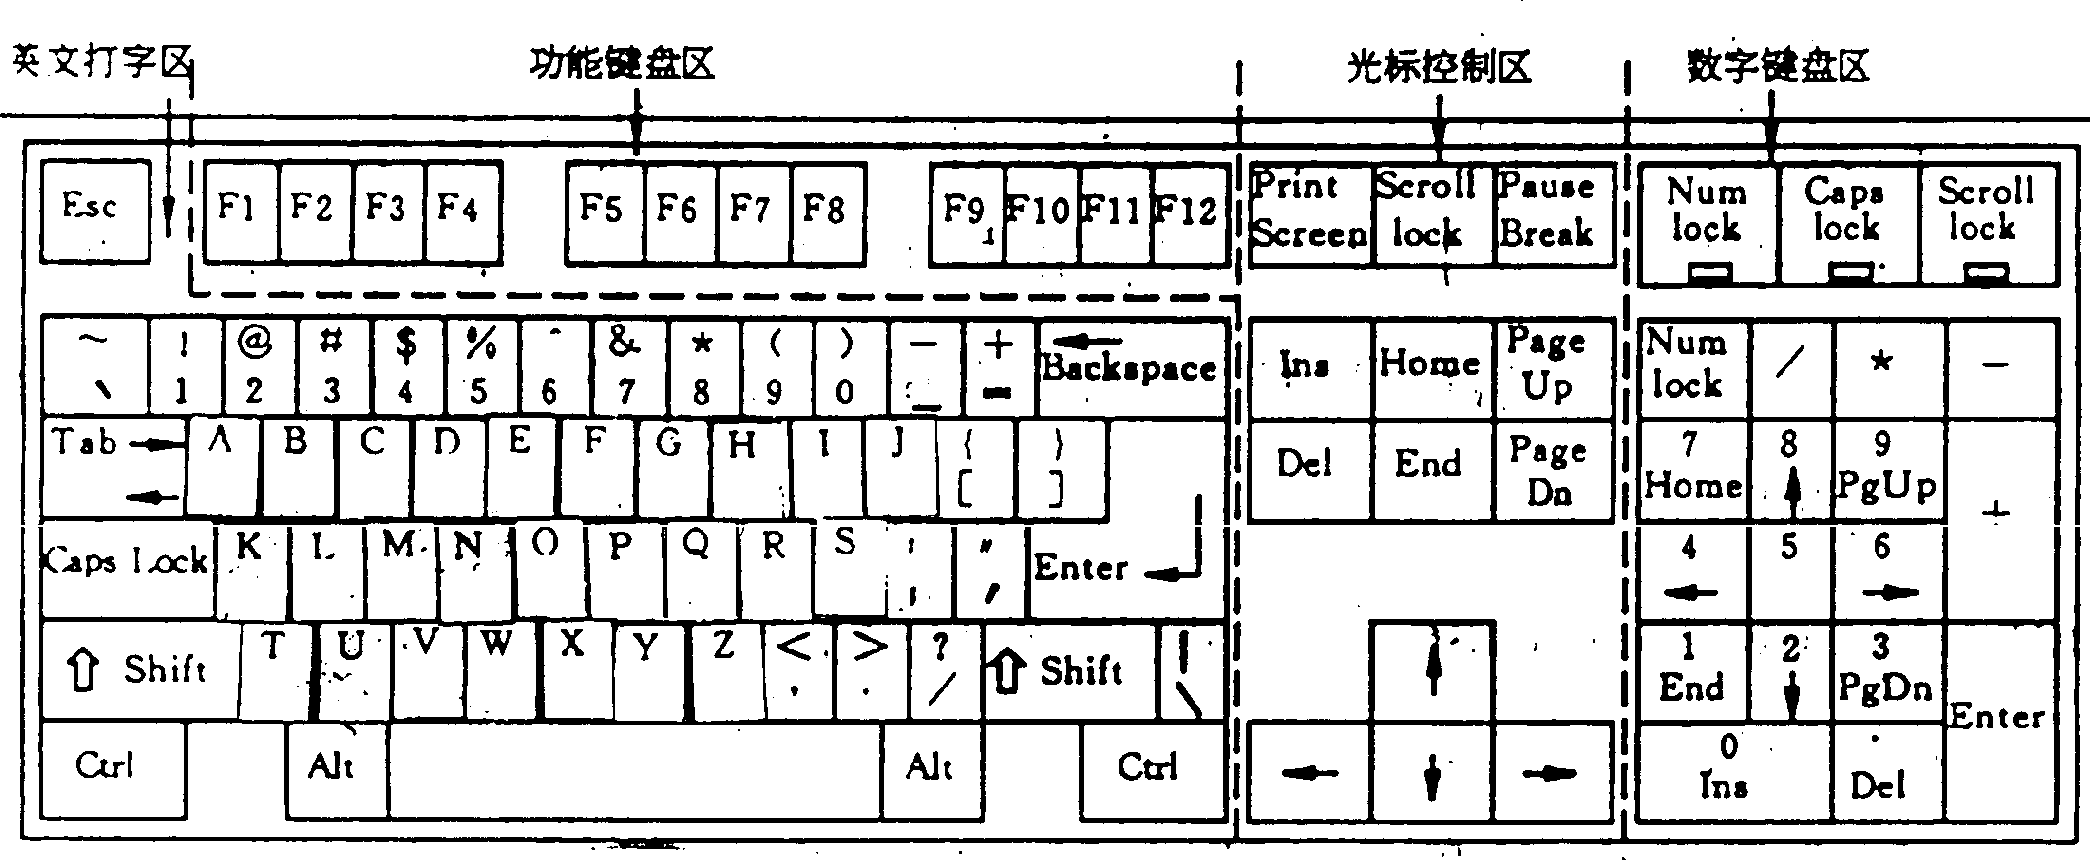 Computer keyboard alphabet layout method